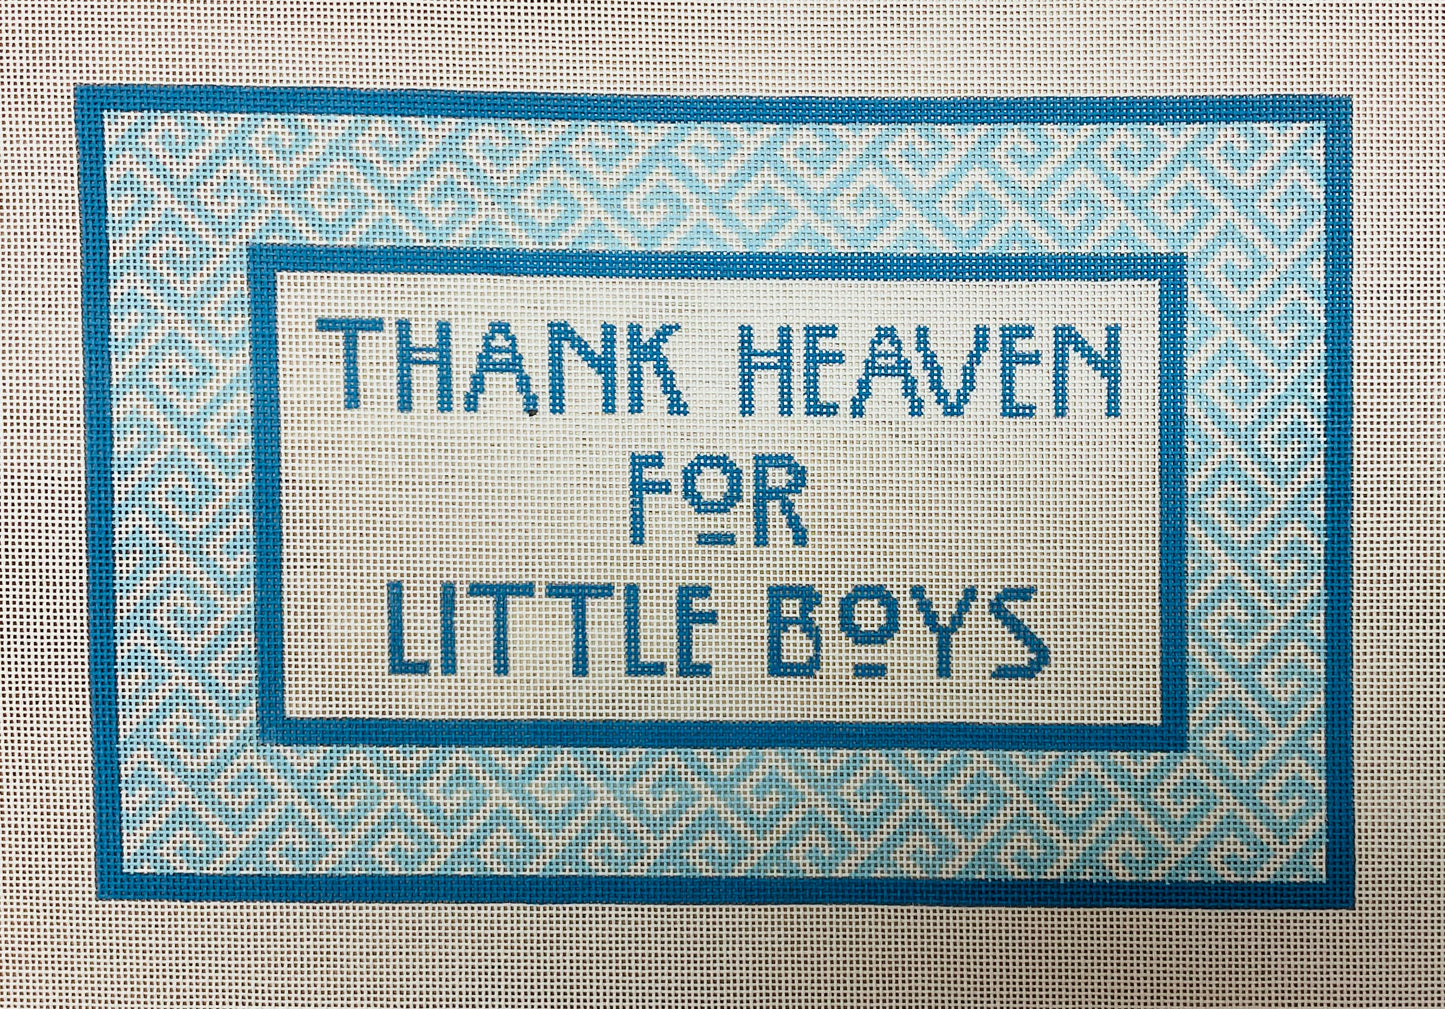 Thank Heaven for Little Boys